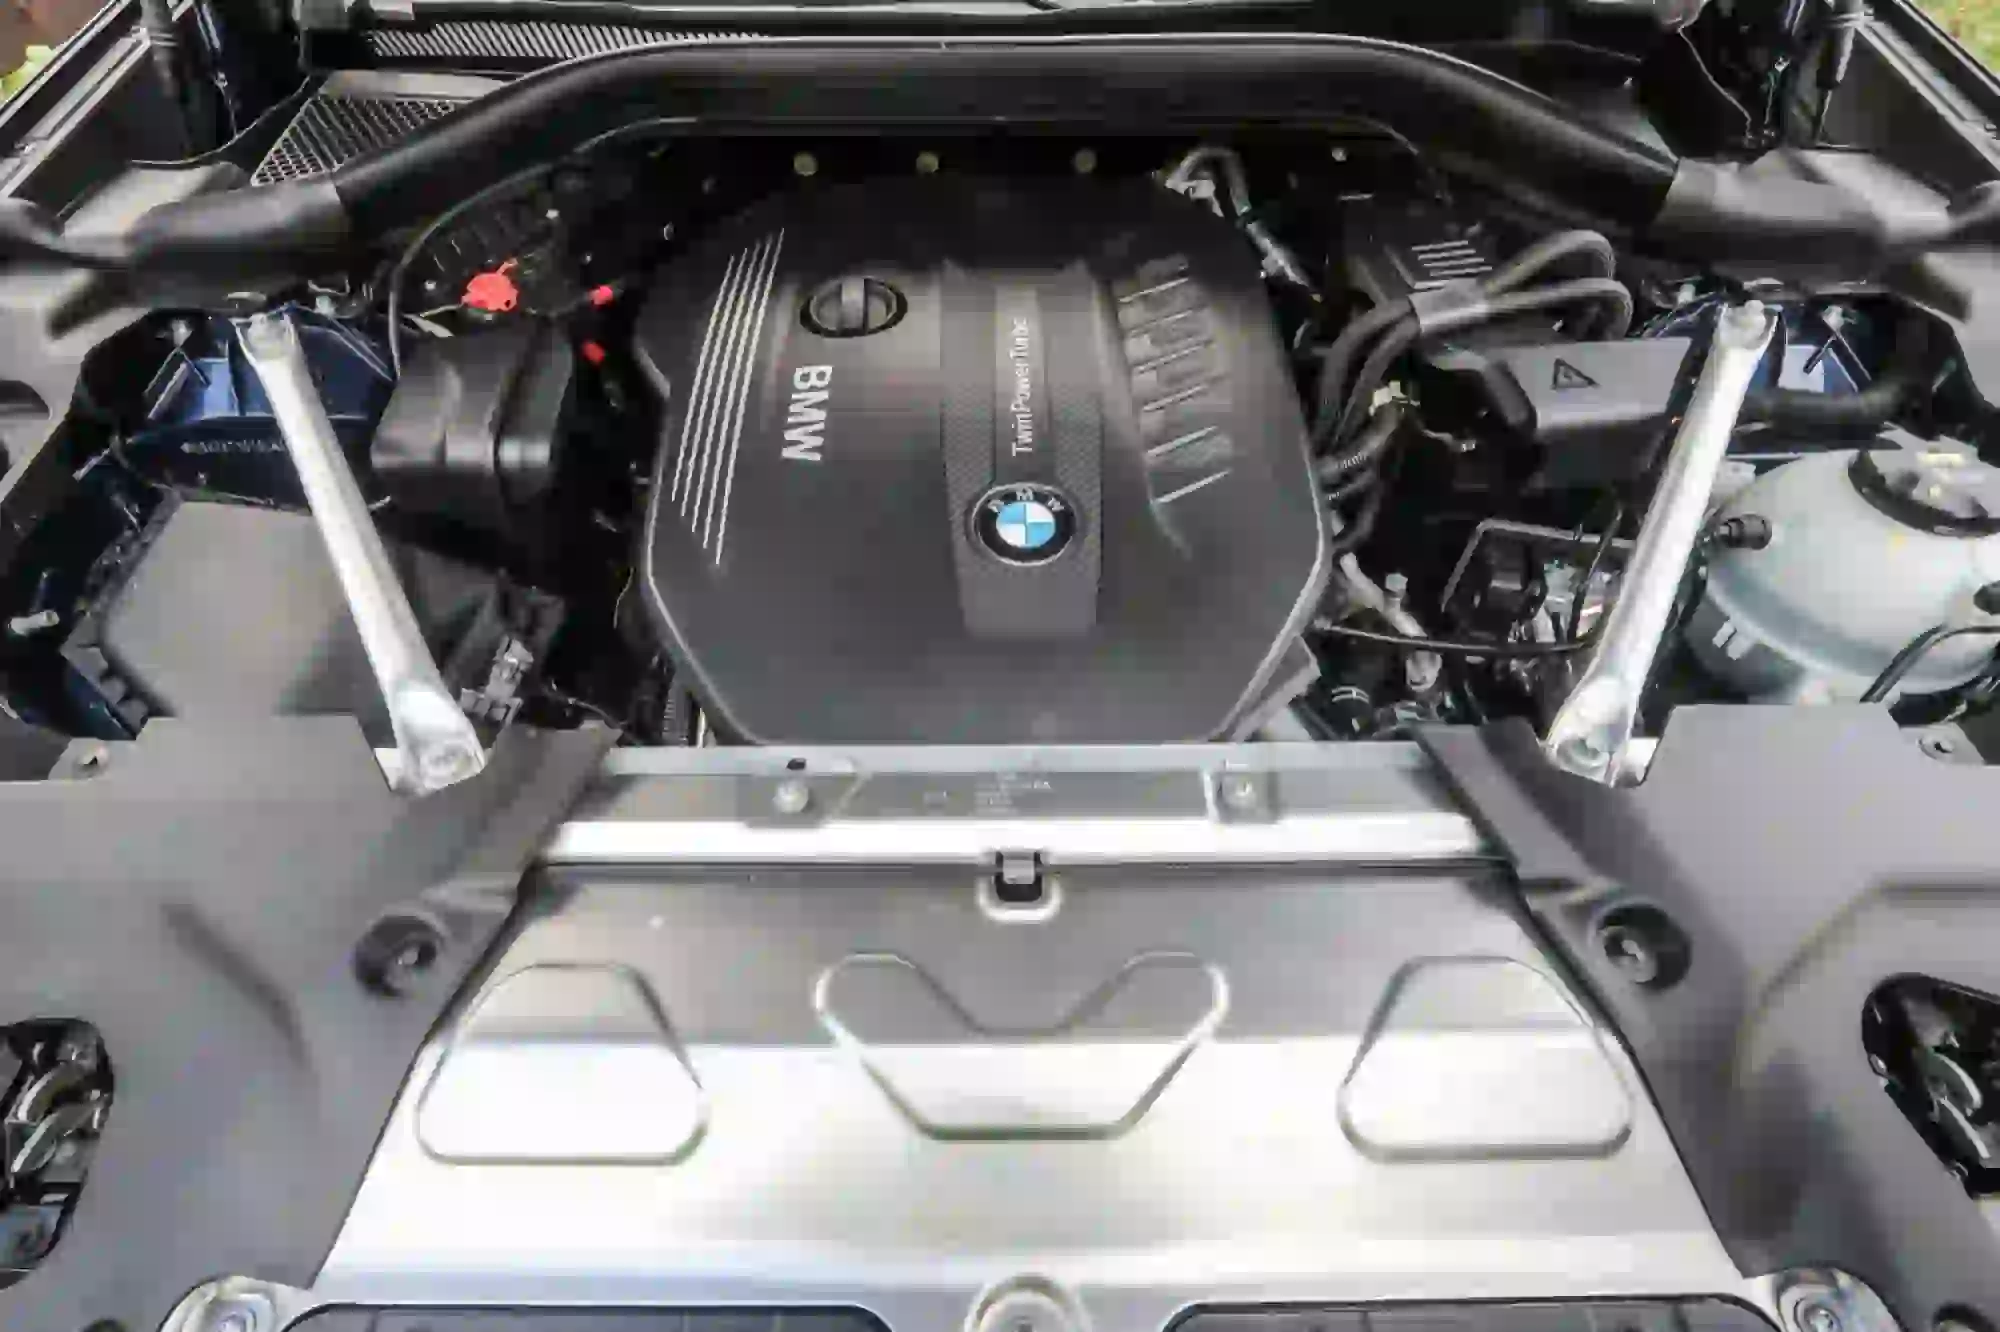 BMW X3 2018 - Test drive - 187